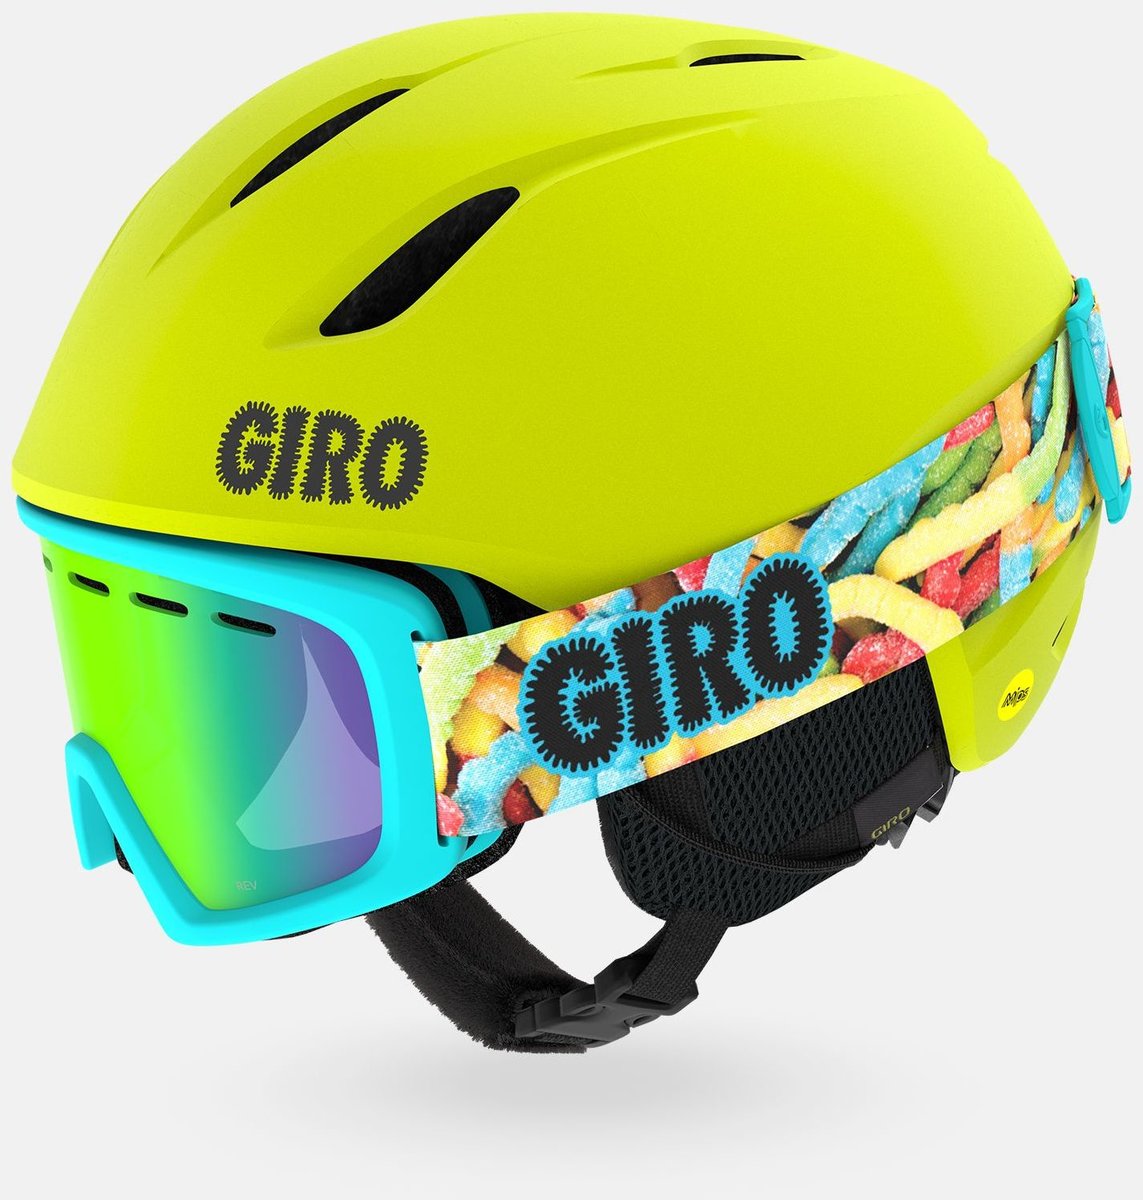 Giro Launch Youth Combo Pack